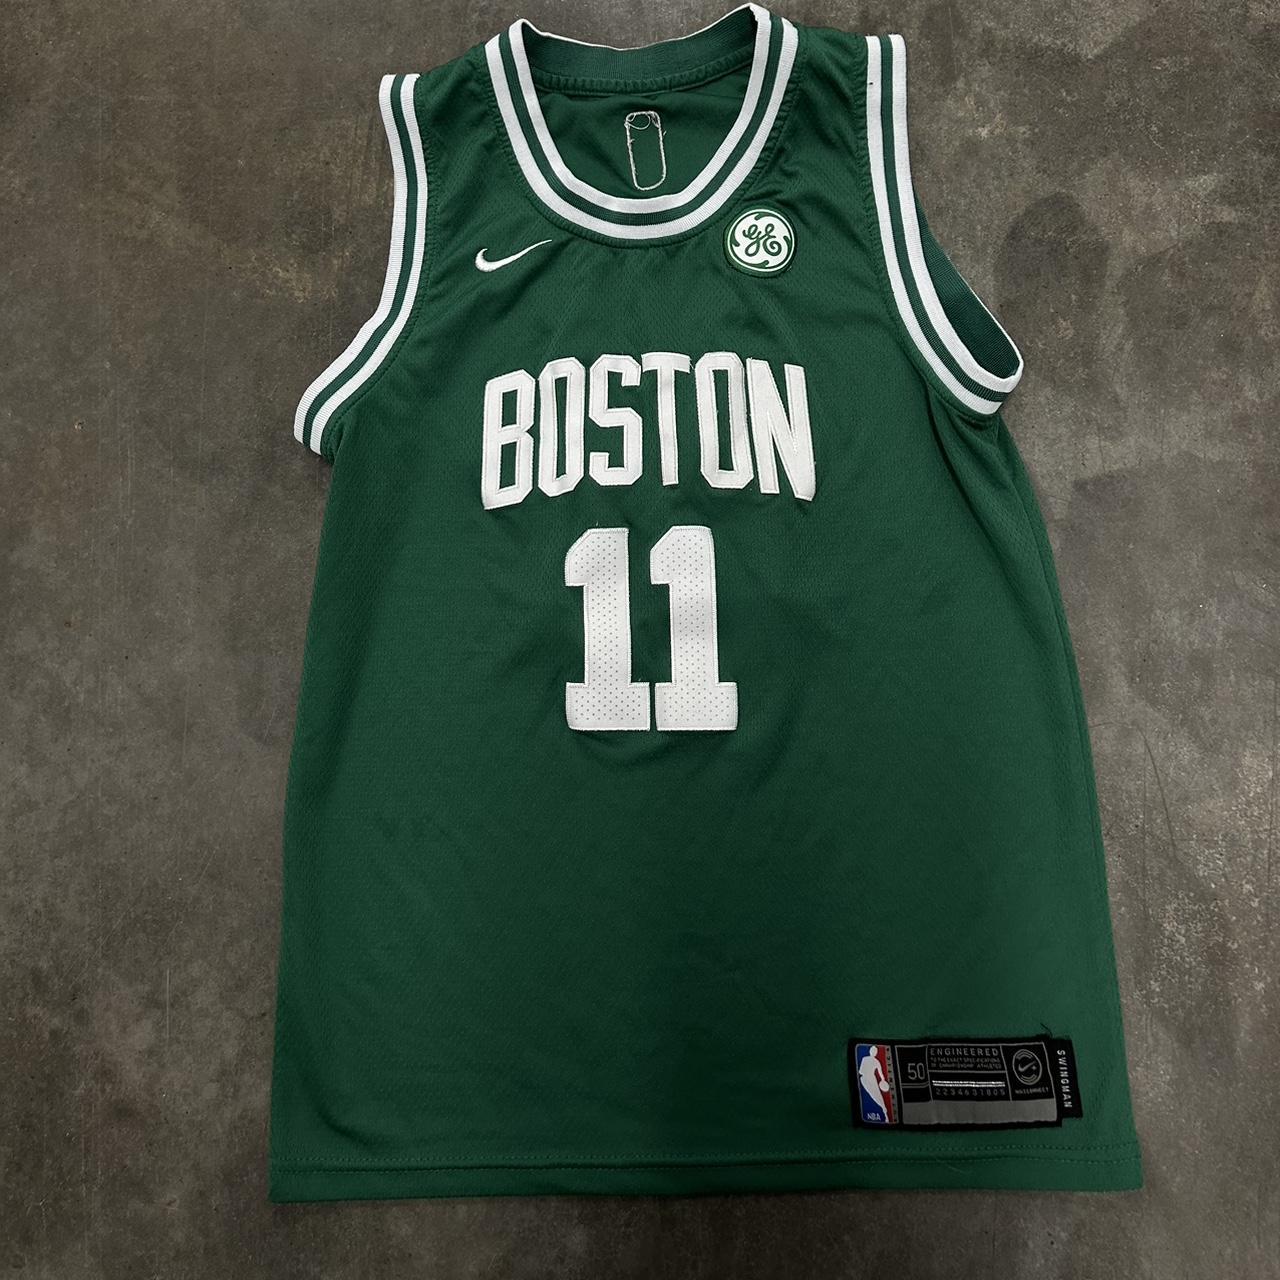 Nike NBA Kyrie Irving #11 Boston Celtics Basketball Jersey